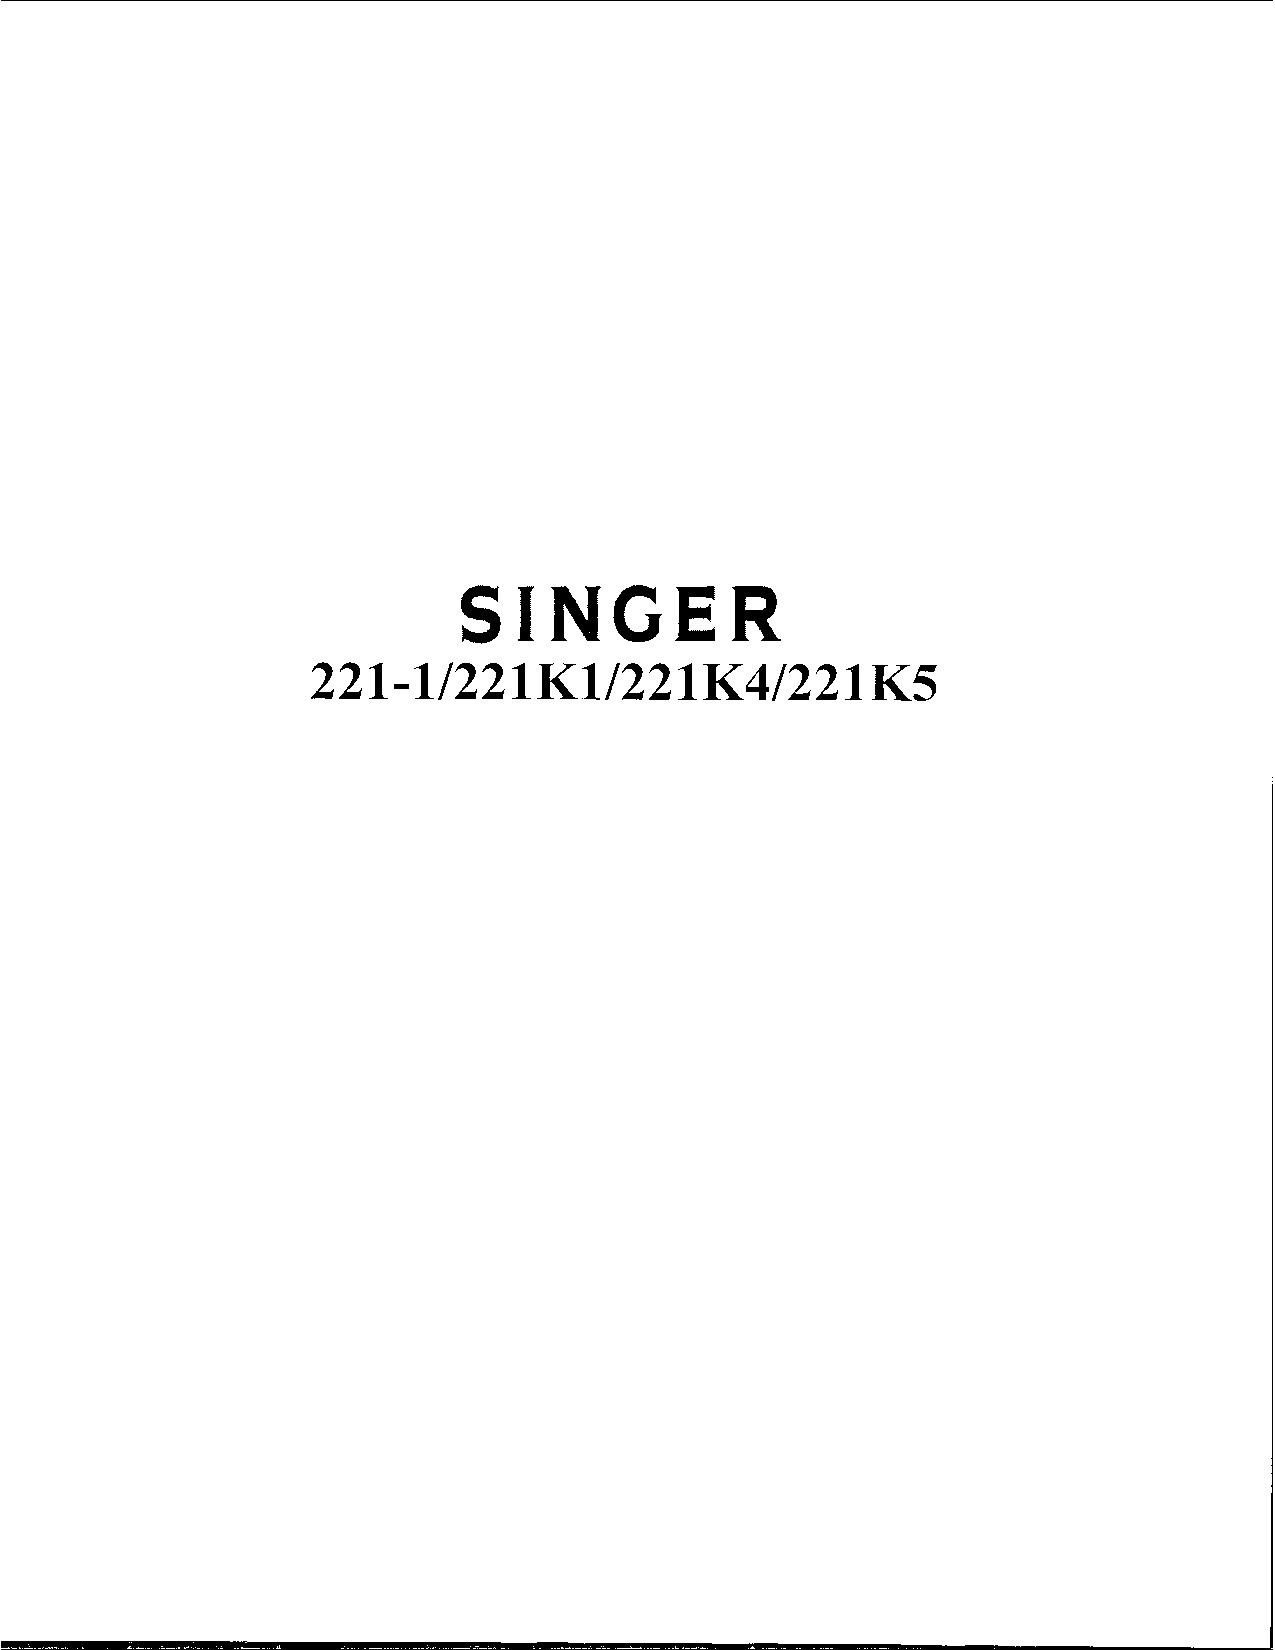 Singer 221K4, 221K5, 221K1, 221-1 User Manual